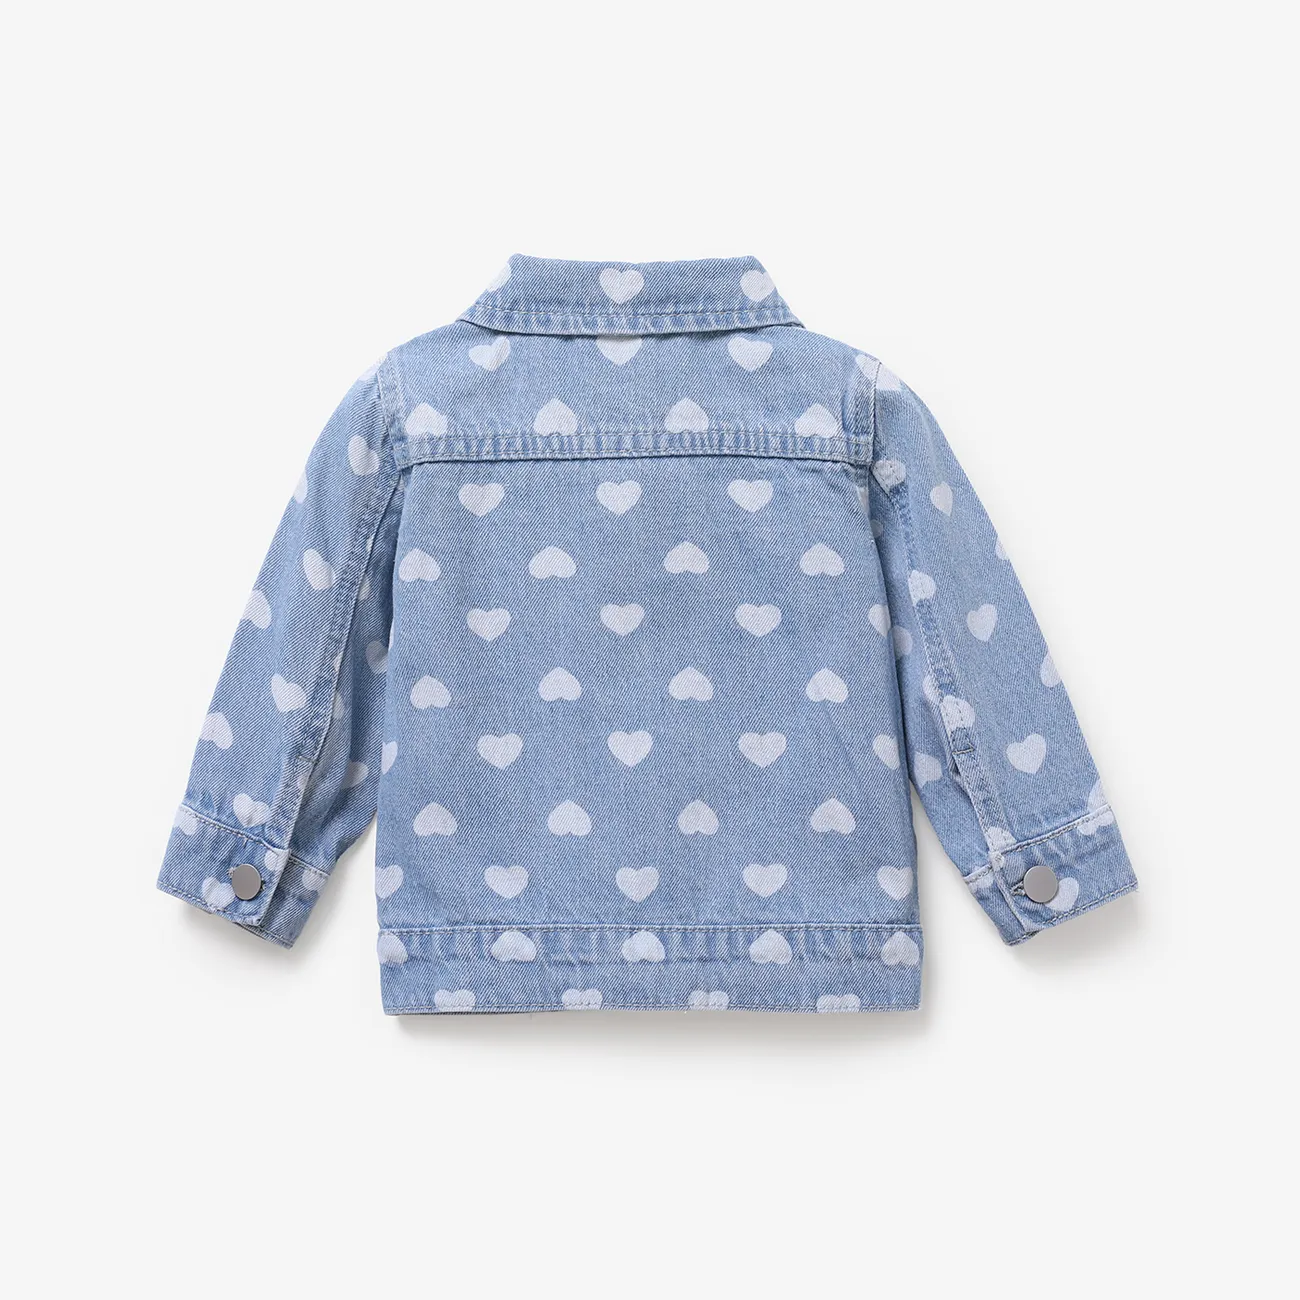  Baby Girl Sweet Heart-shaped Pattern Denim Jacket  Blue big image 1